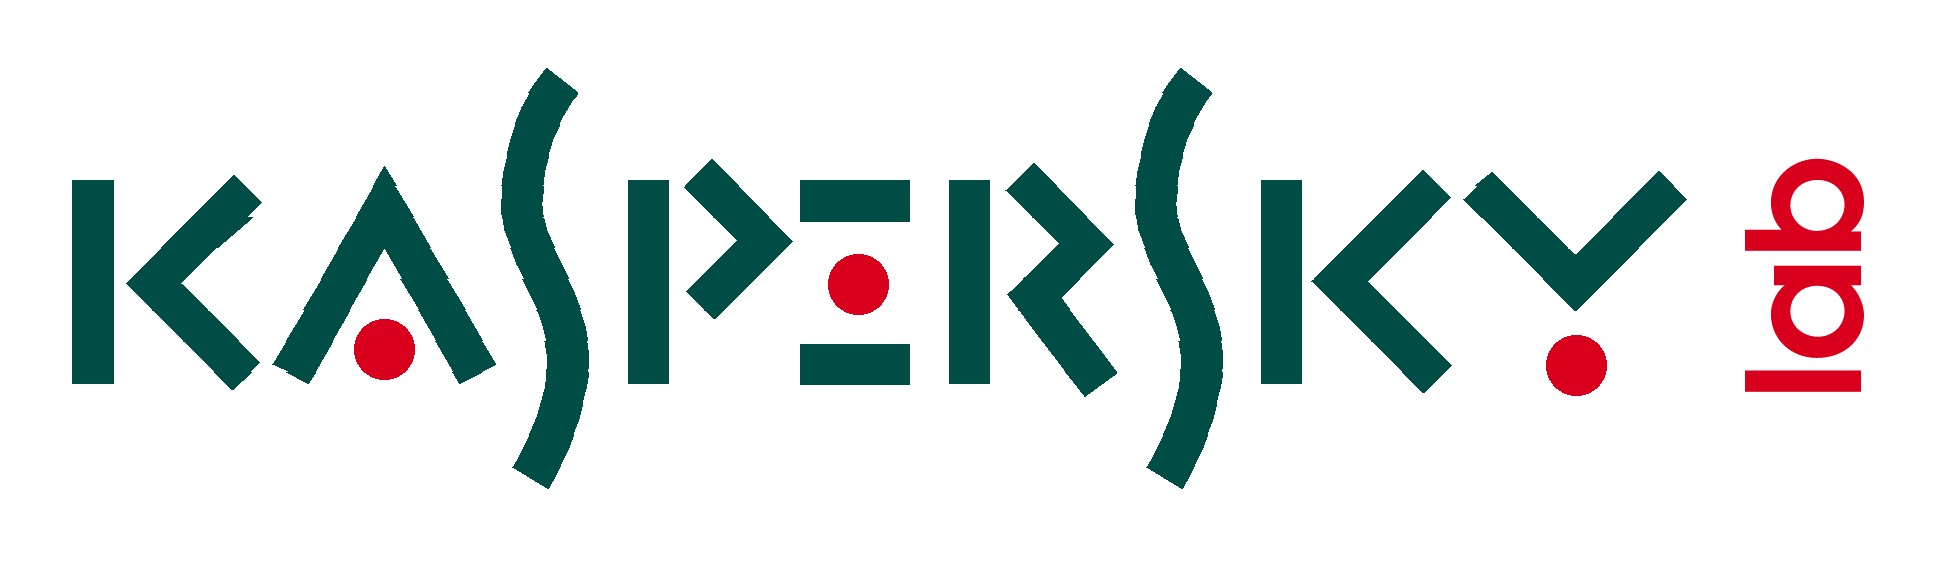 kaspersky logo1